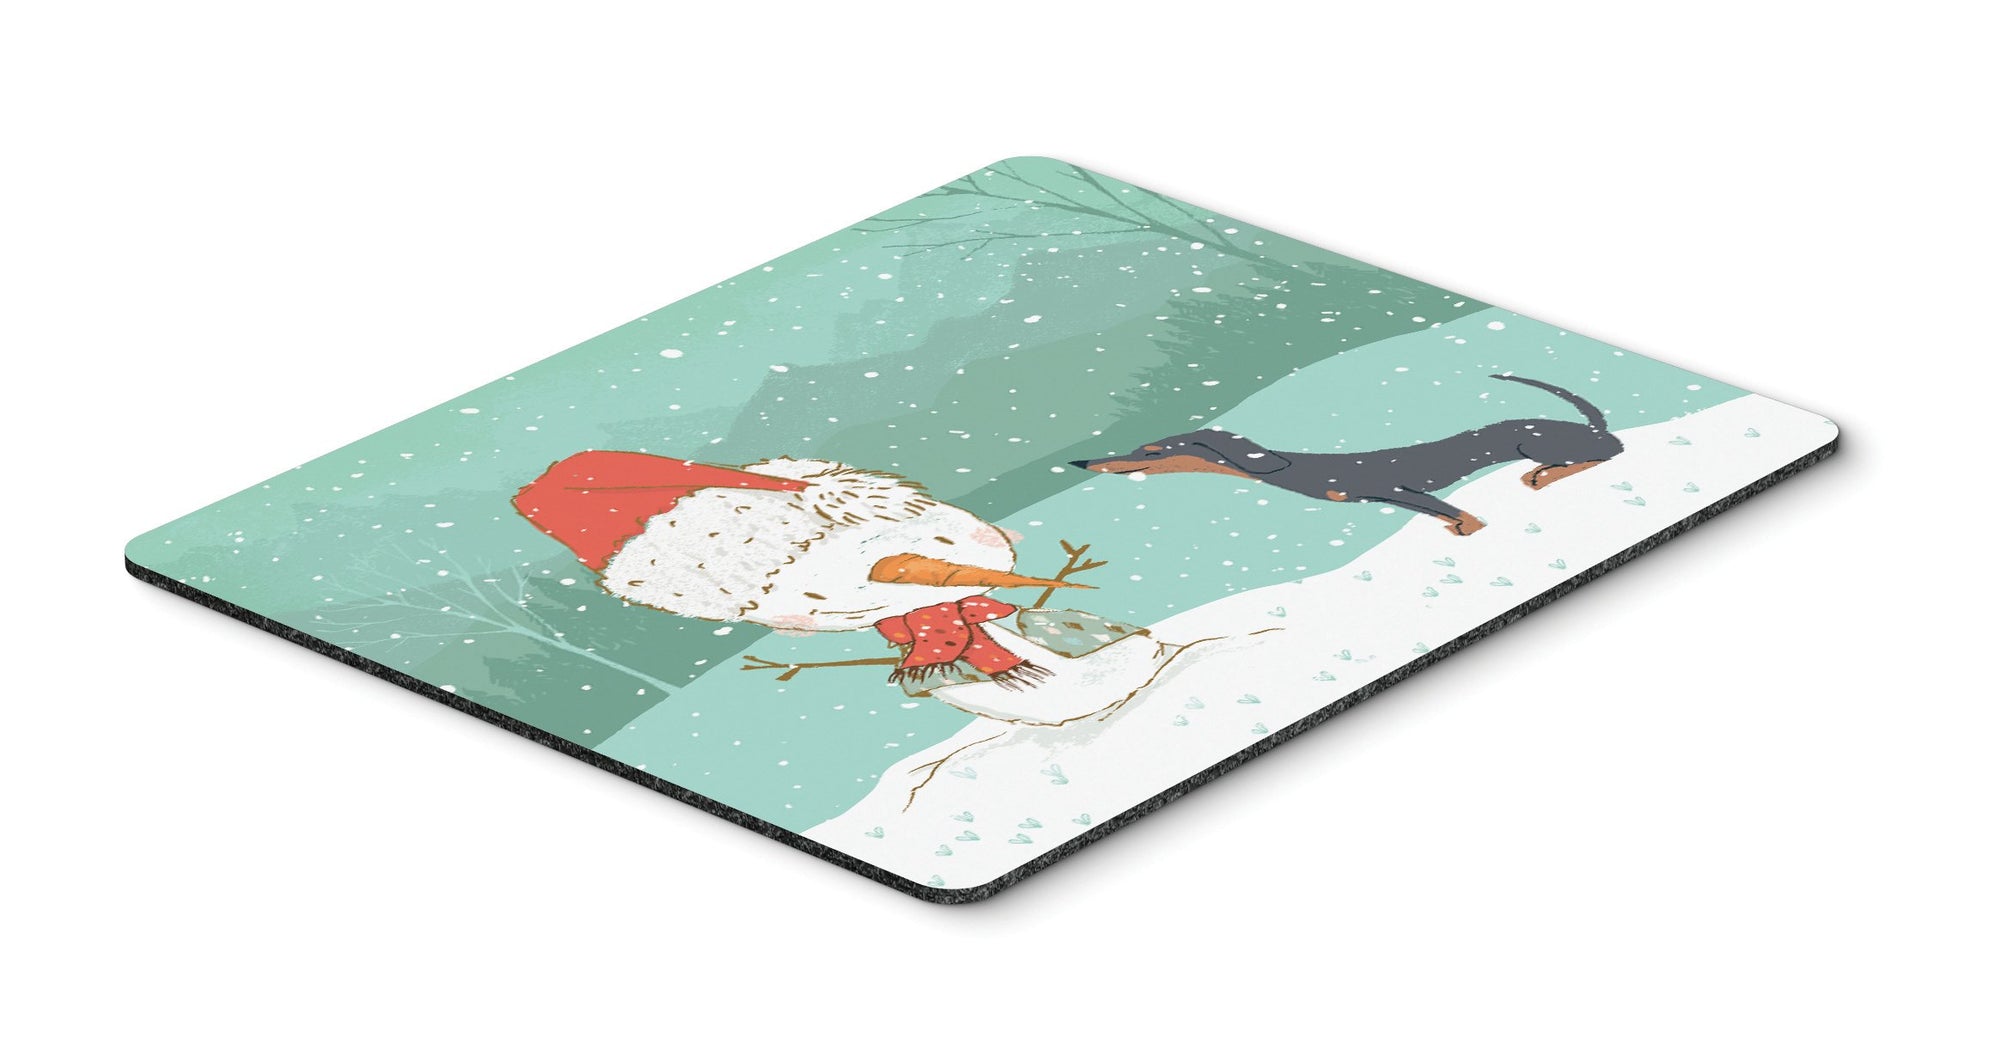 Black Tan Dachshund Snowman Christmas Mouse Pad, Hot Pad or Trivet CK2083MP by Caroline's Treasures